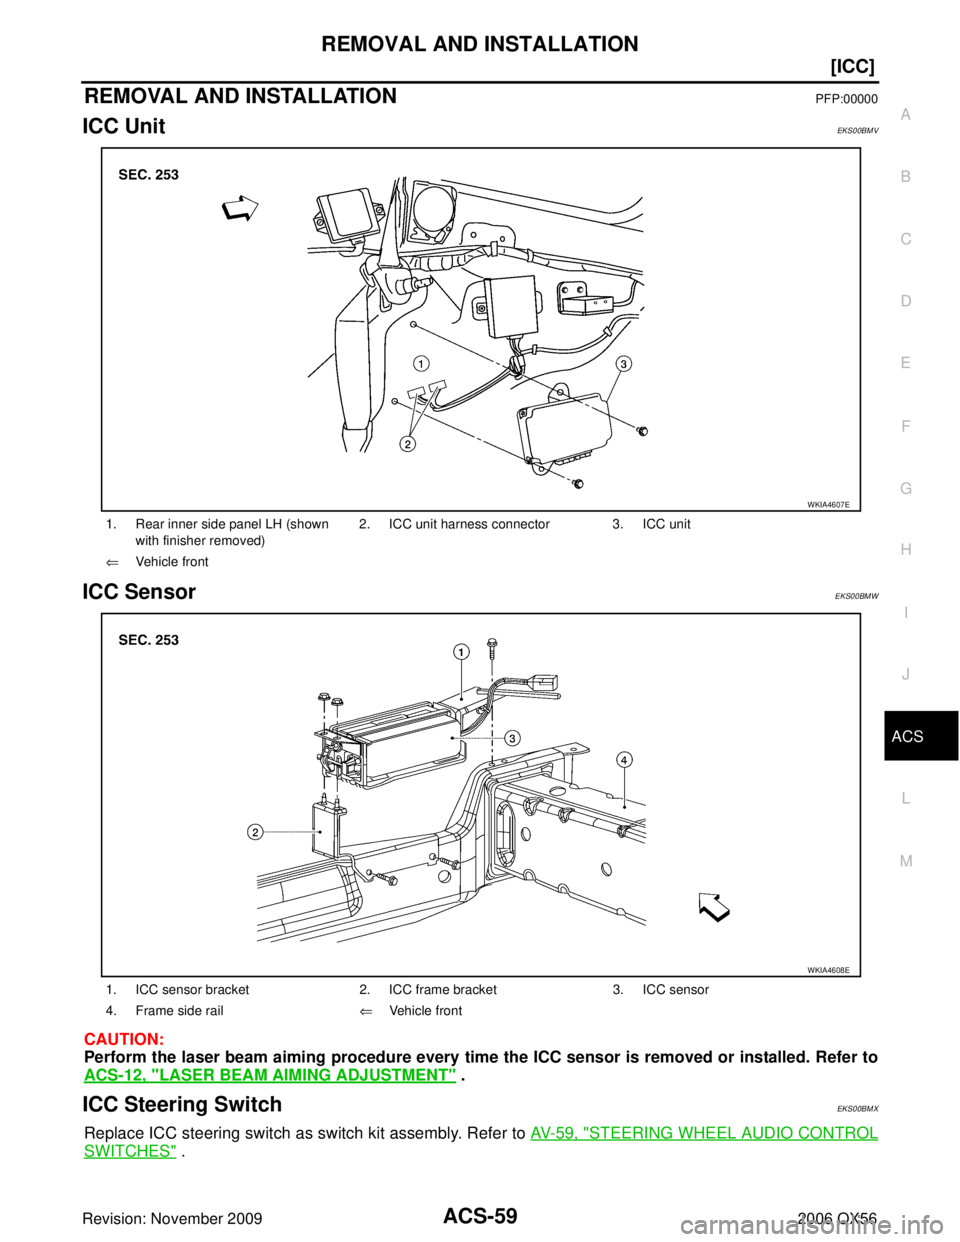 INFINITI QX56 2006  Factory Service Manual REMOVAL AND INSTALLATIONACS-59
[ICC]
C
DE
F
G H
I
J
L
M A
B
ACS
Revision: November 2009 2006 QX56
REMOVAL AND INSTALLATIONPFP:00000
ICC UnitEKS00BMV
ICC SensorEKS00BMW
CAUTION:
Perform the laser beam 